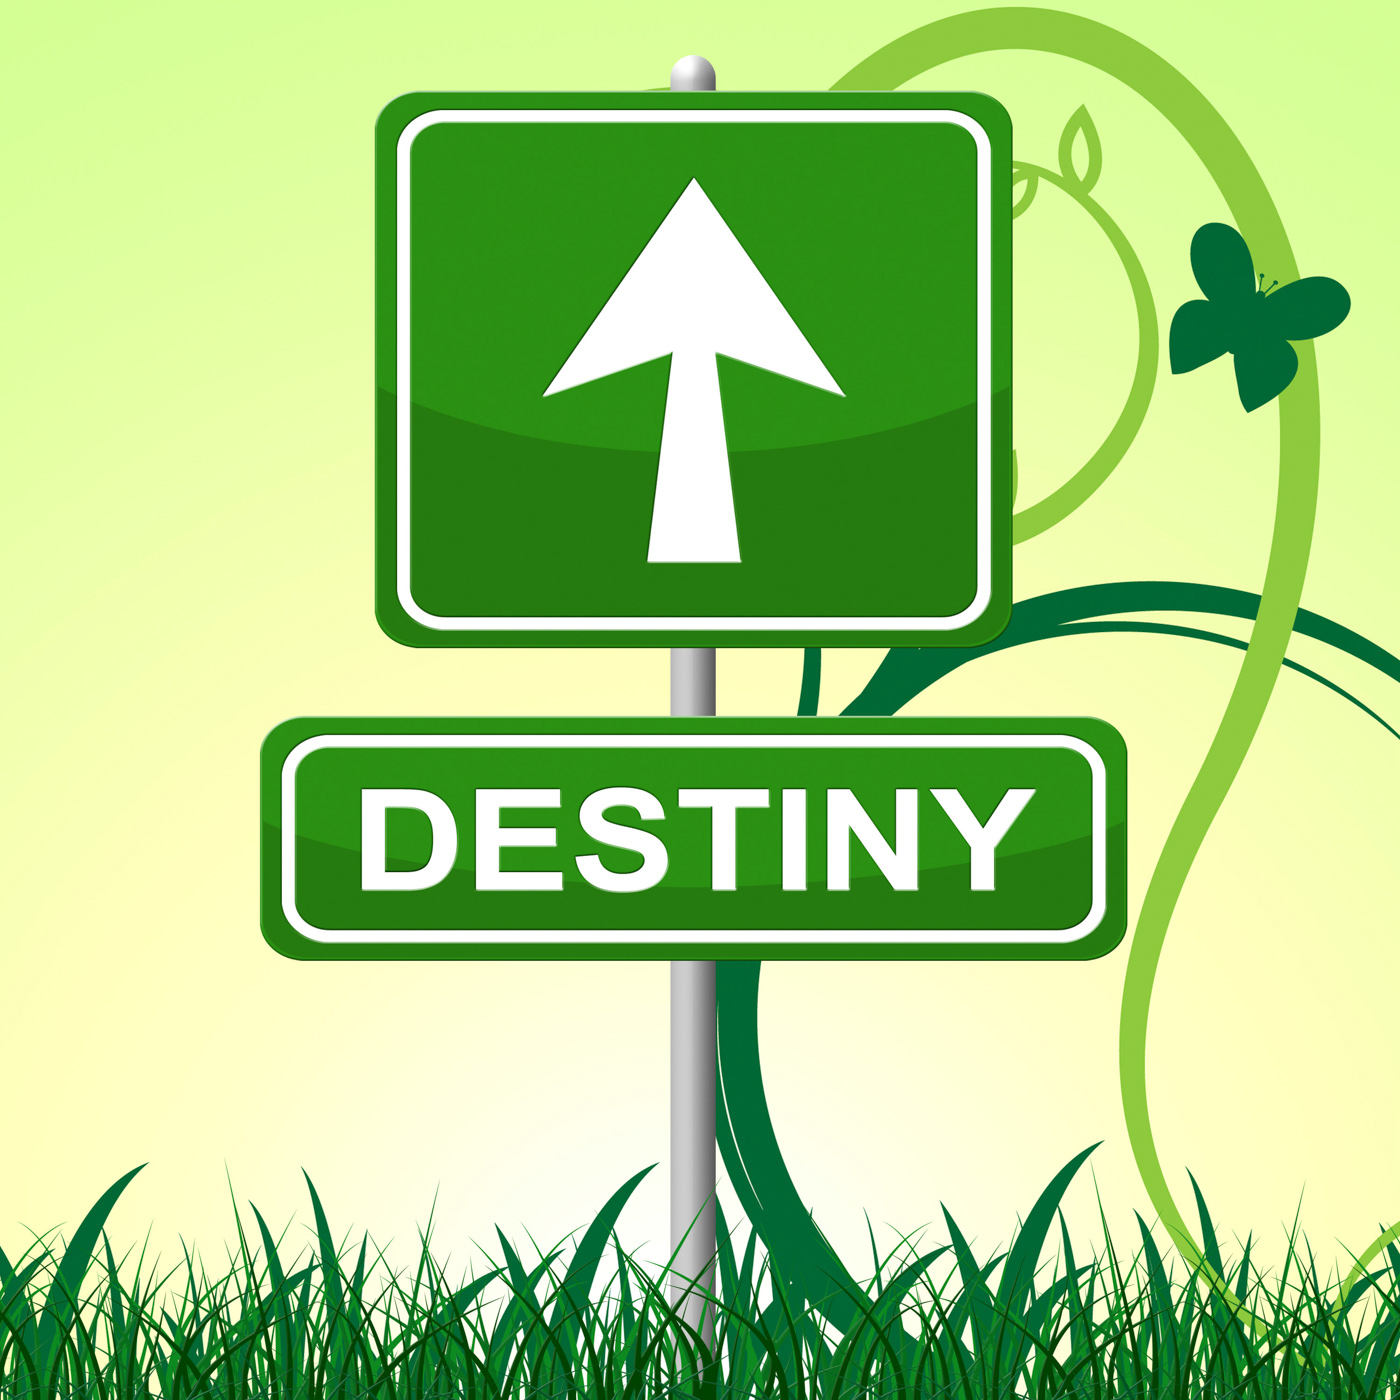 Destiny sign represents pointing progress and future photo